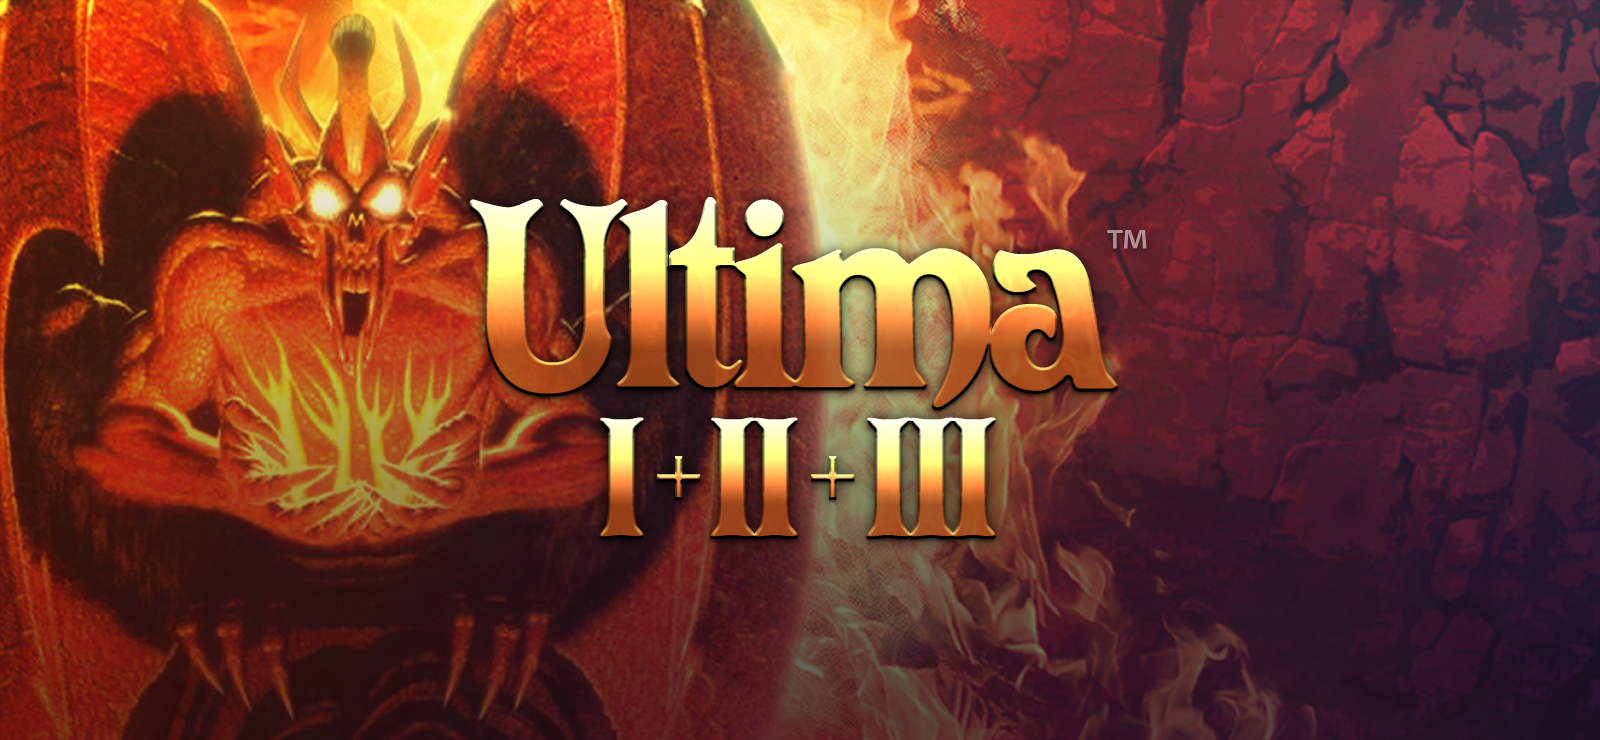 Ultima™ 1+2+3